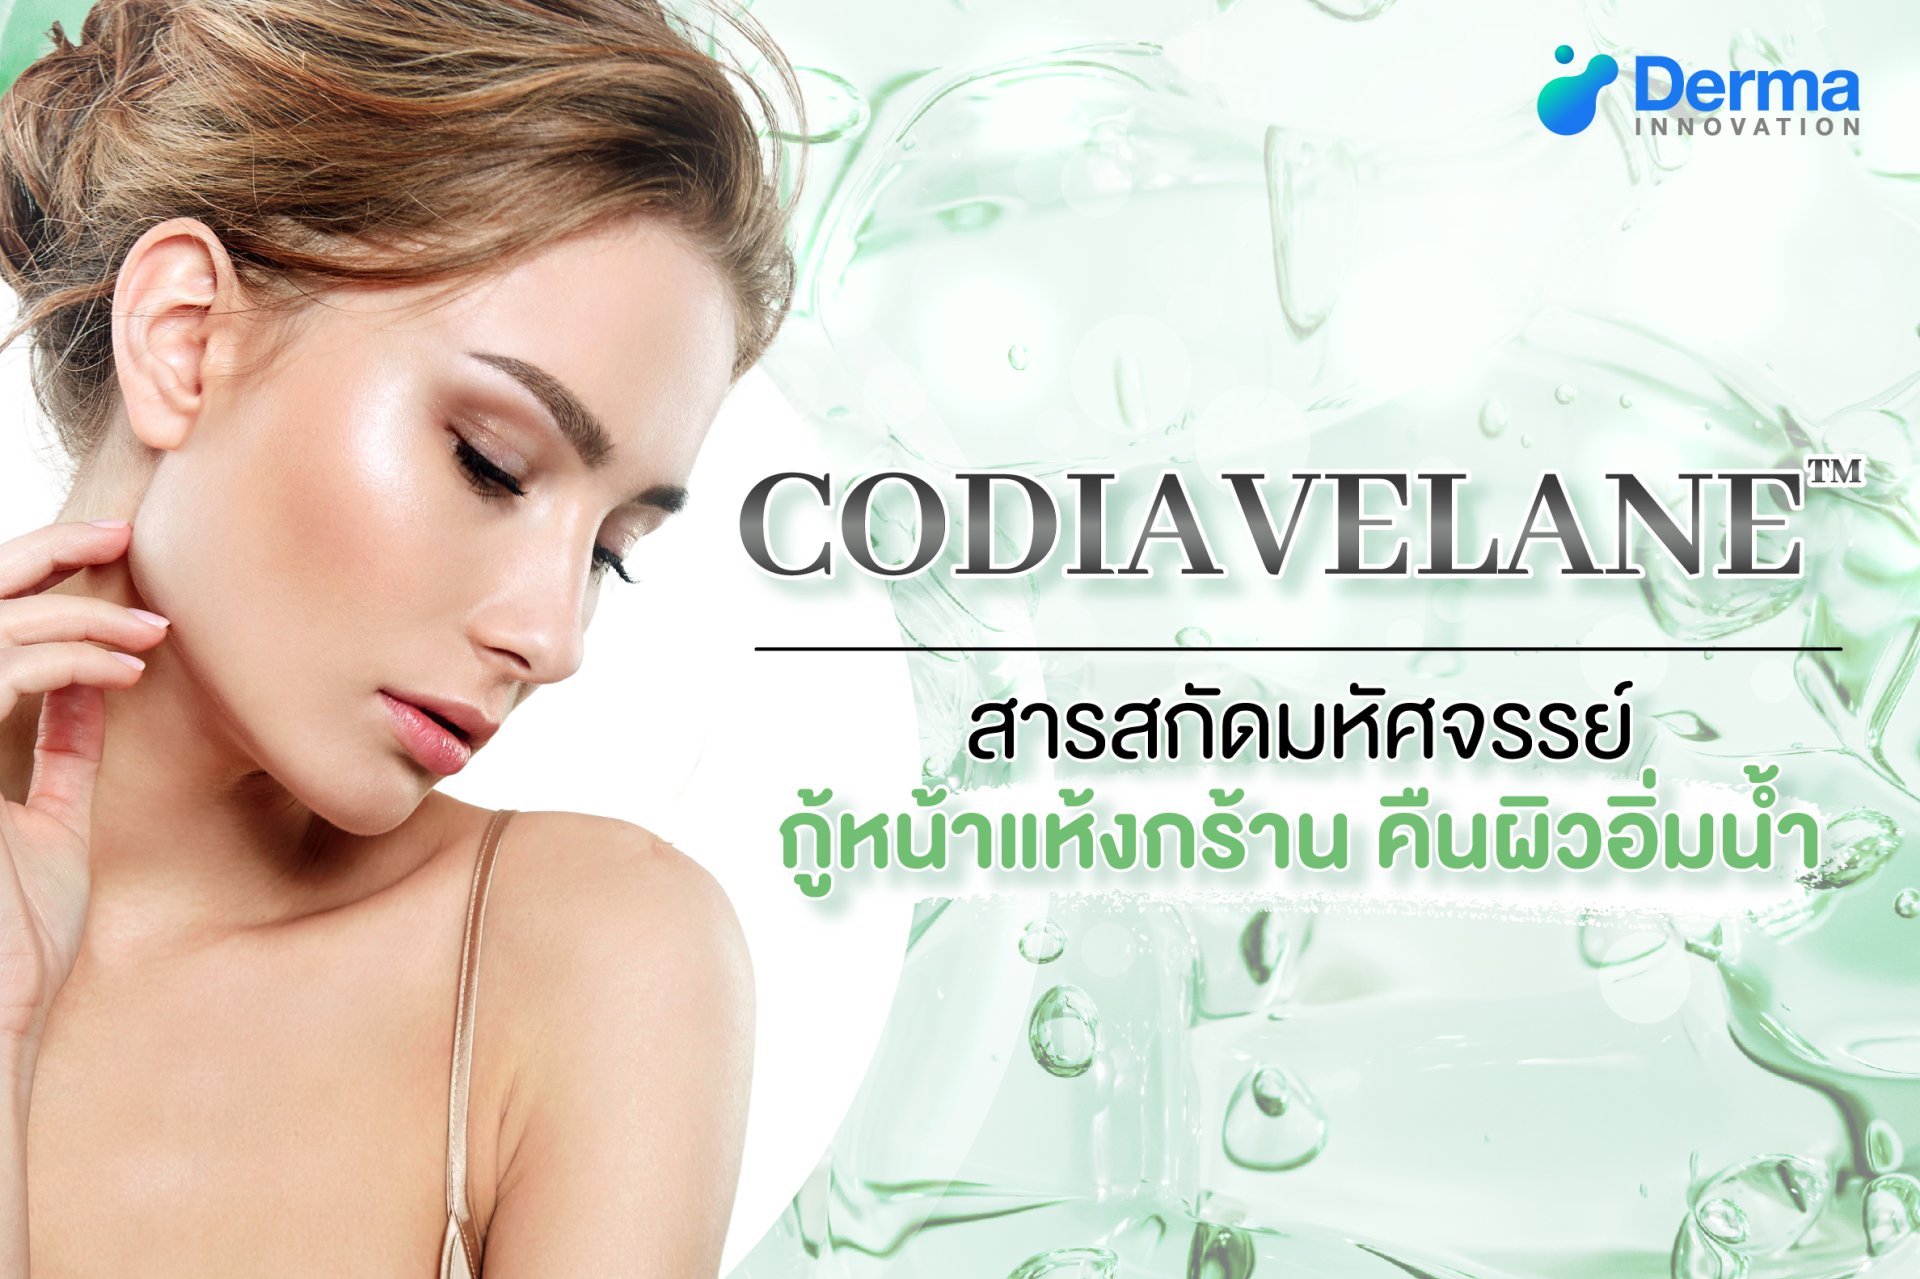 CODIAVELANE ™ Magical extract that restores skin moisture.